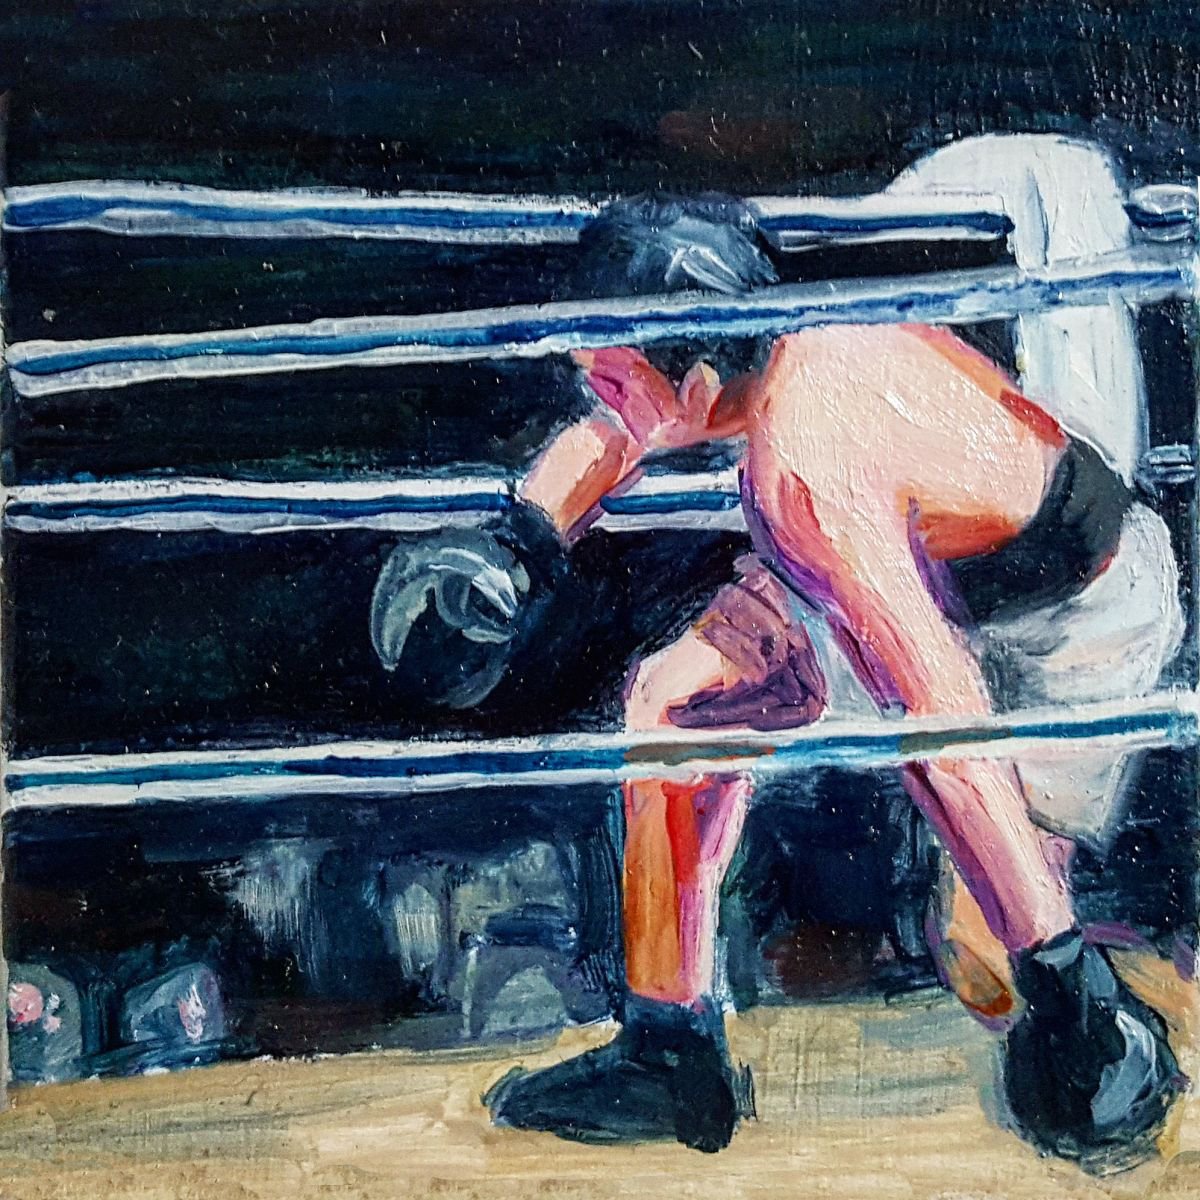 Fighter No.3 by Samantha Han